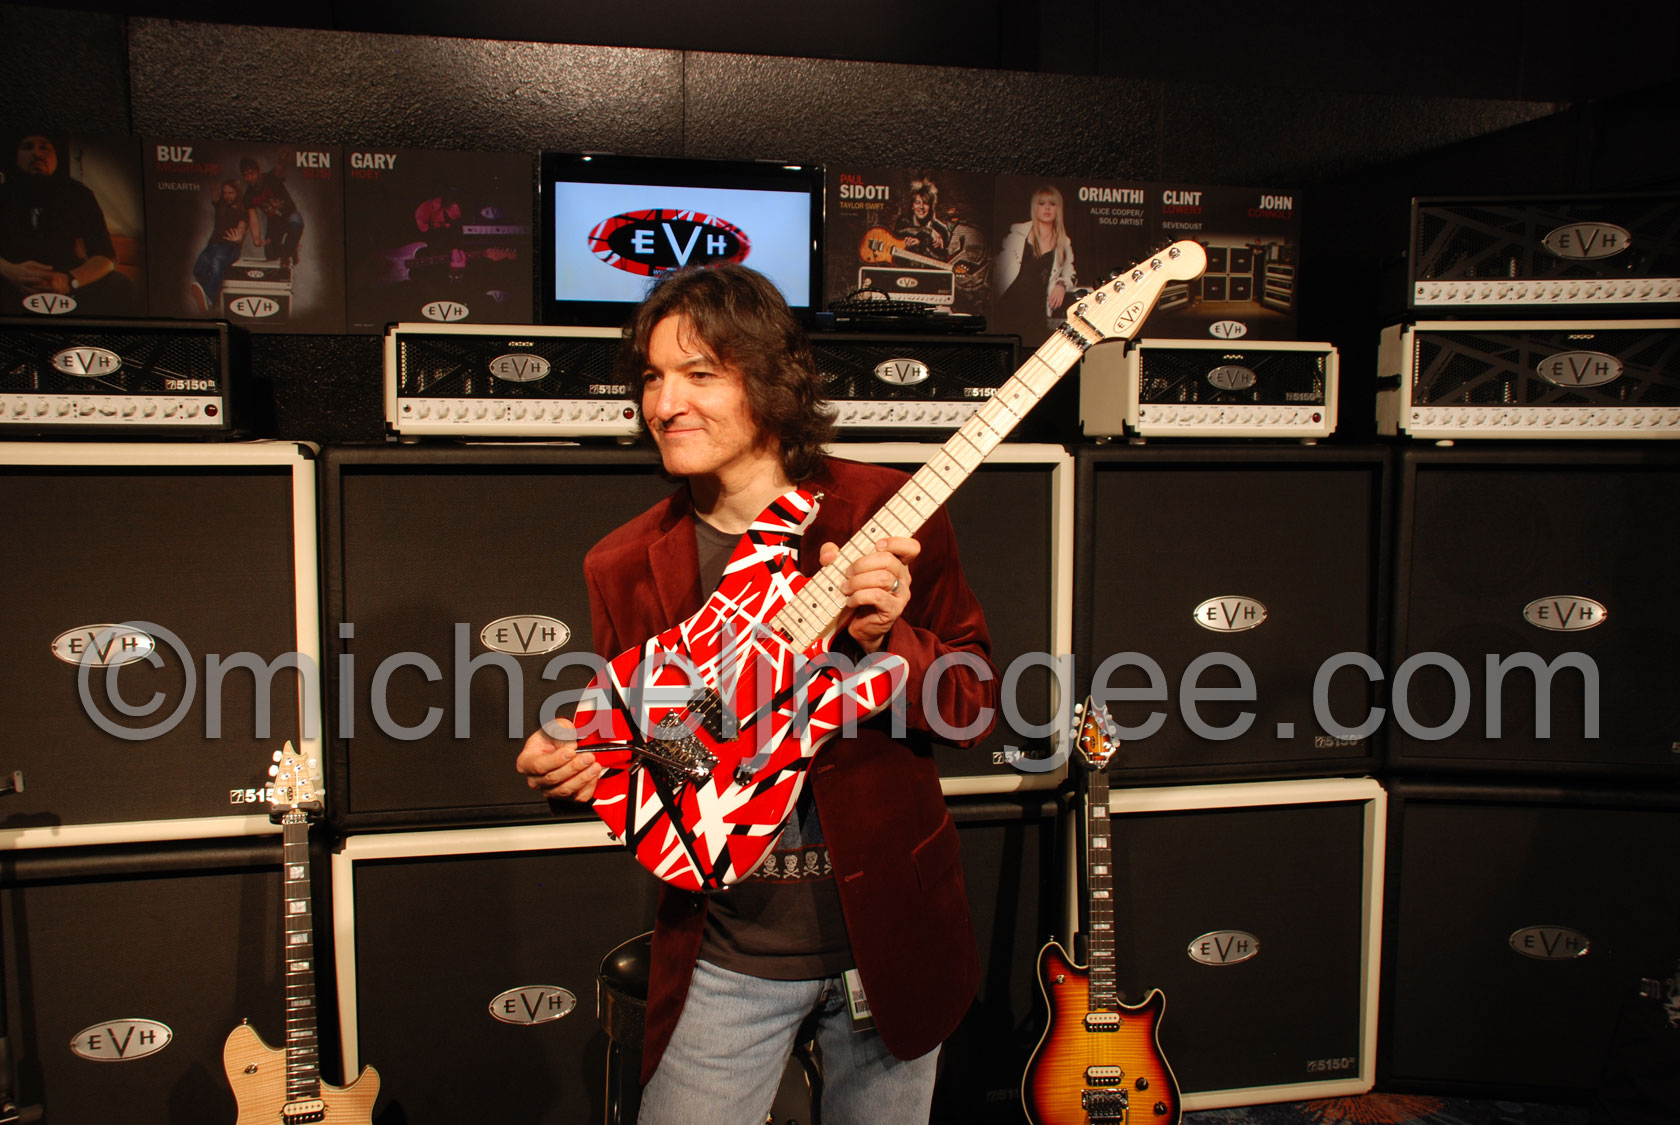 Edward Van Halen / michaeljmcgee.com